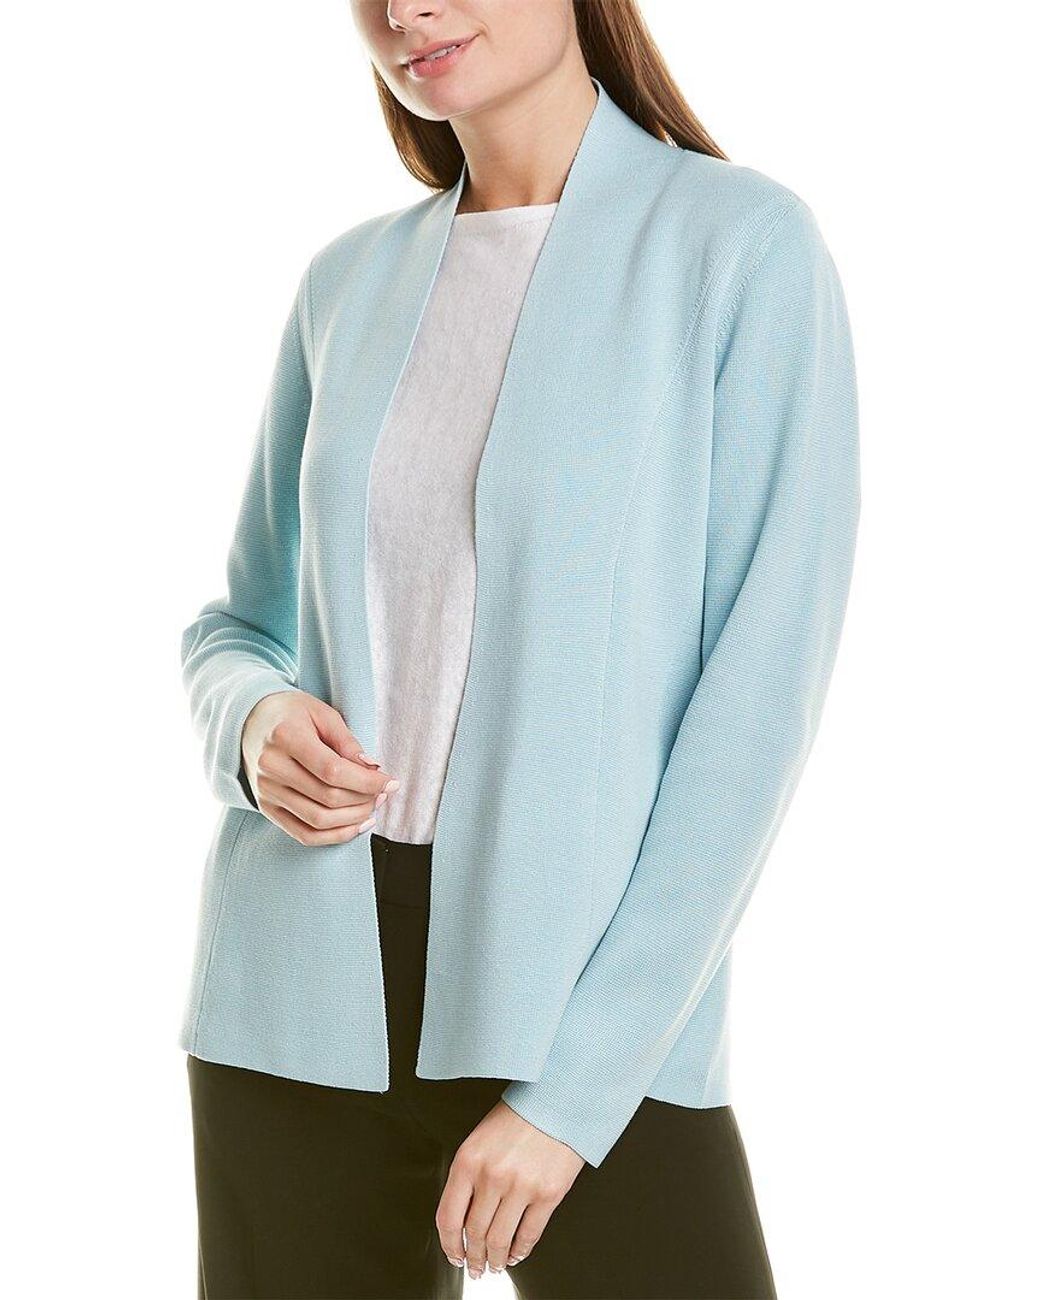 Cardigan Sweater Womens Eileen Fisher Light Blue